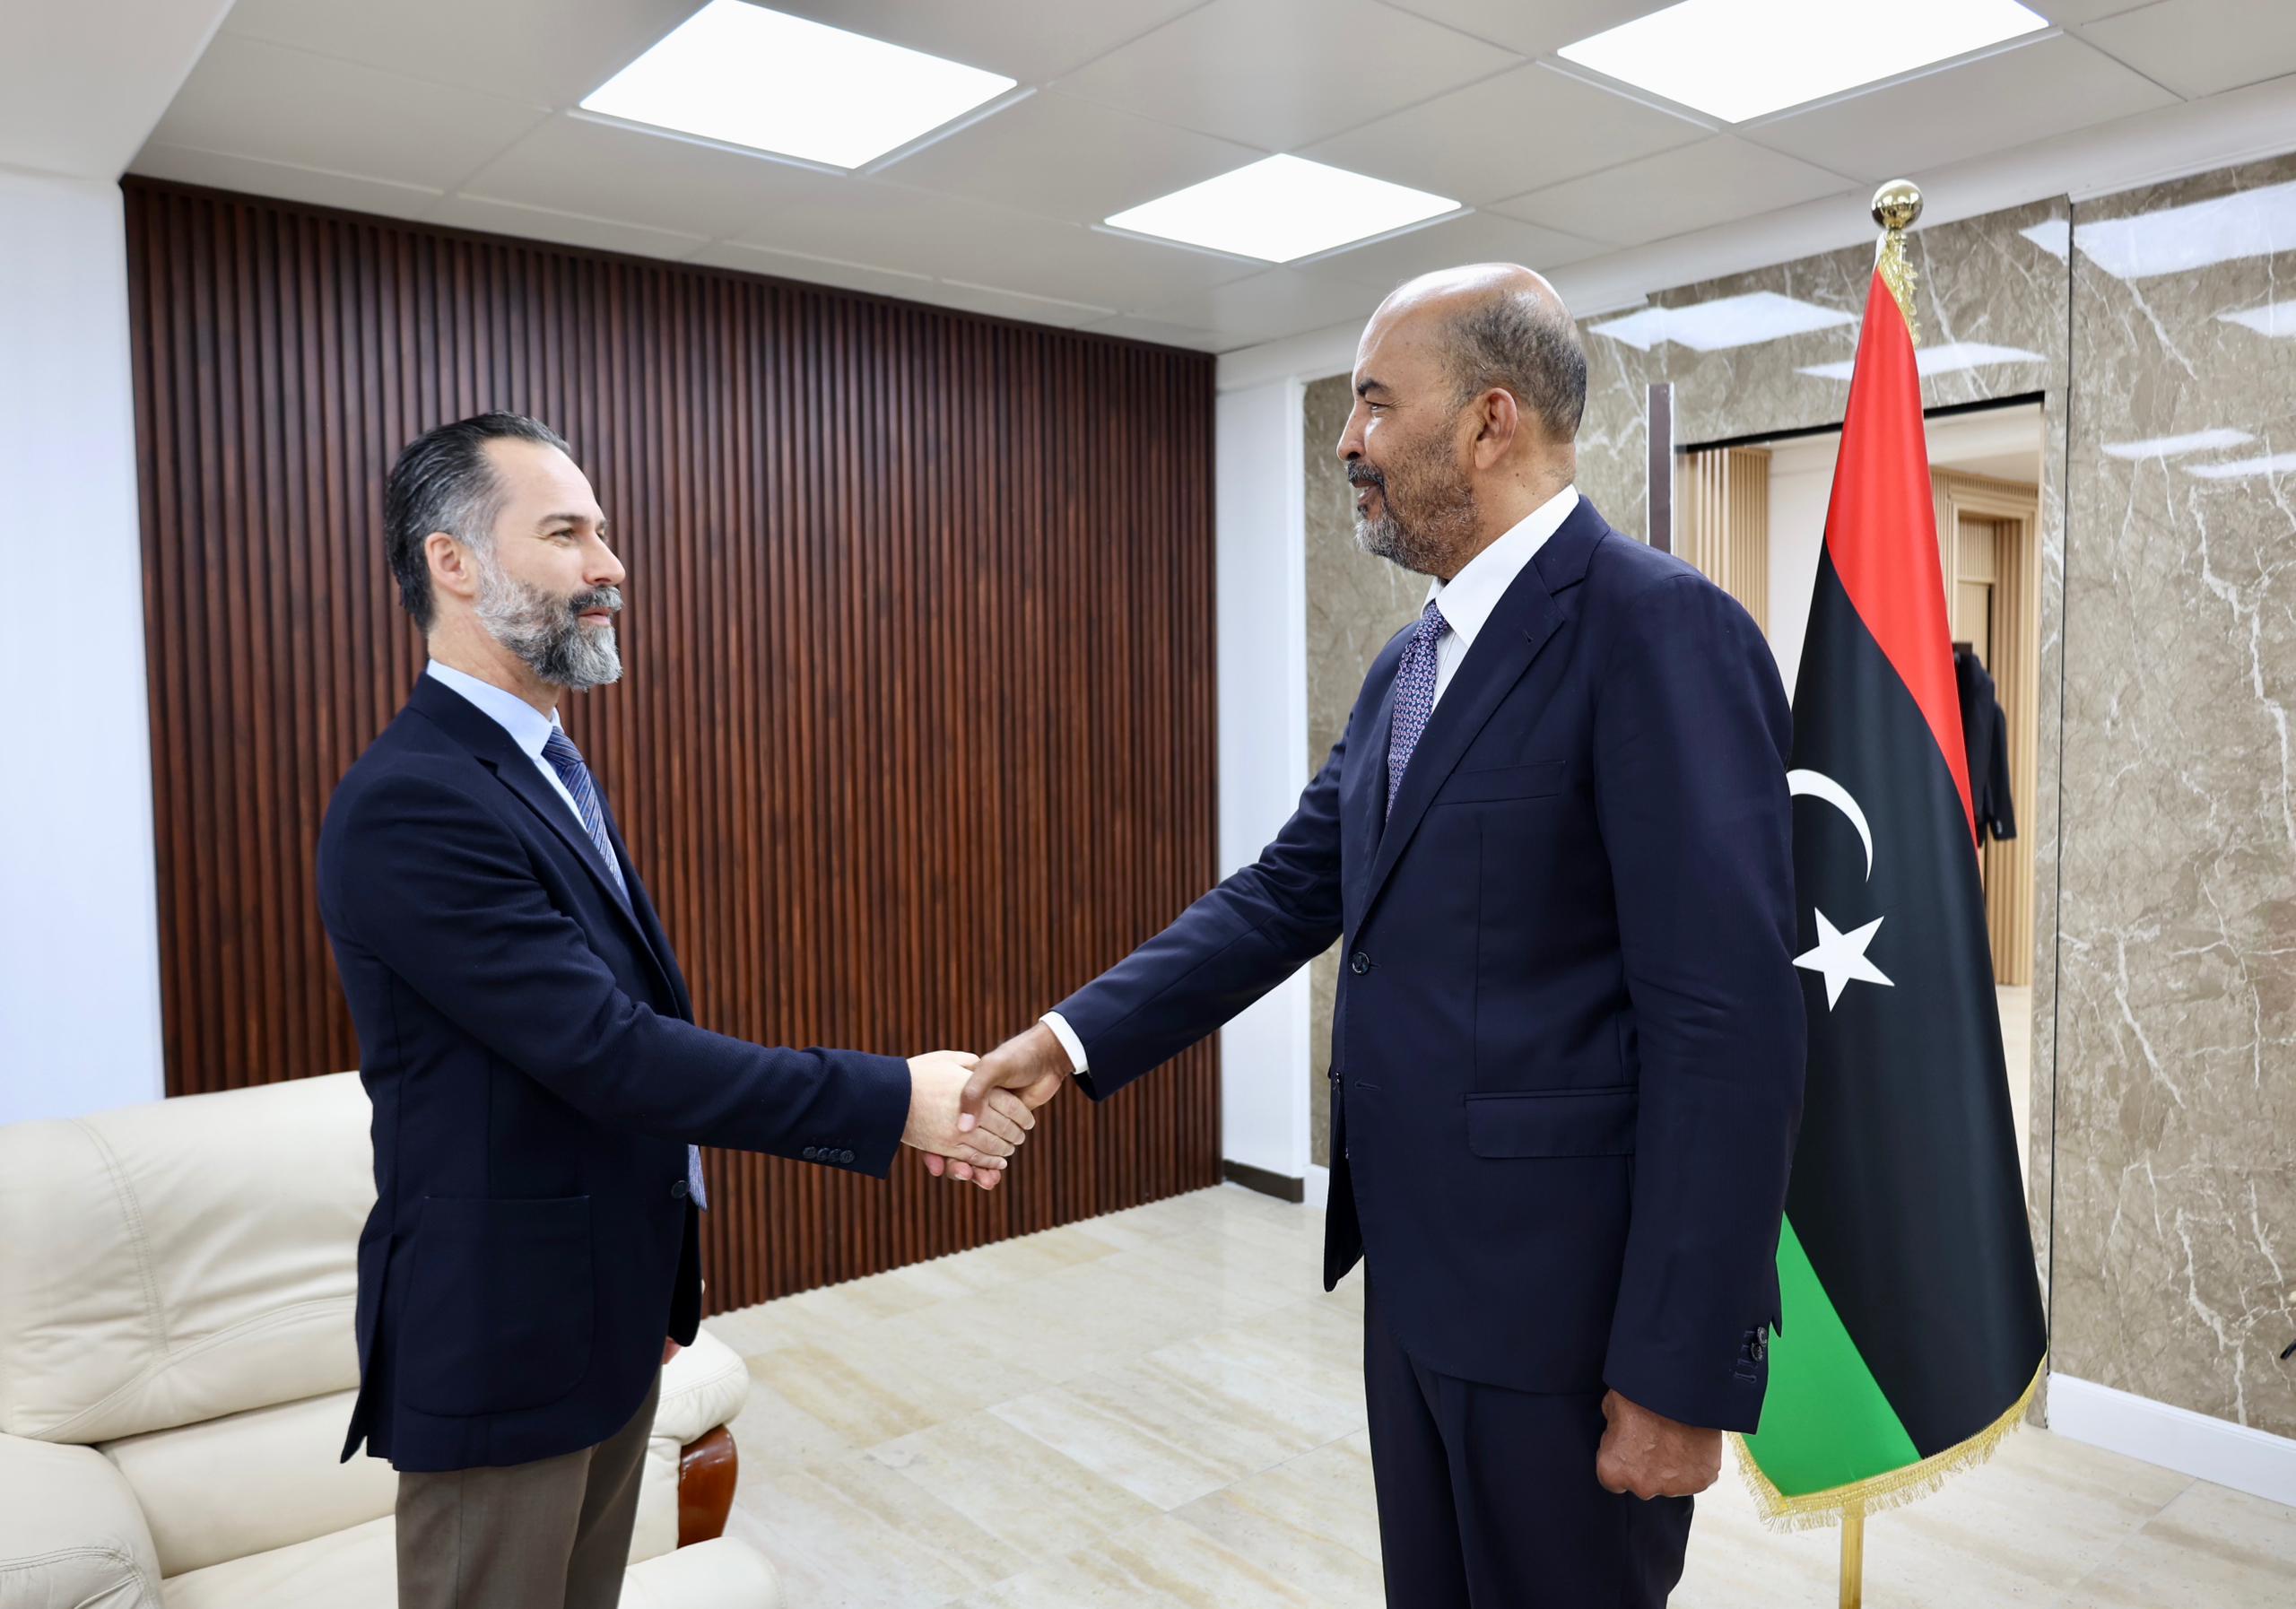 Al-Koni receives the Turkish ambassador to Libya